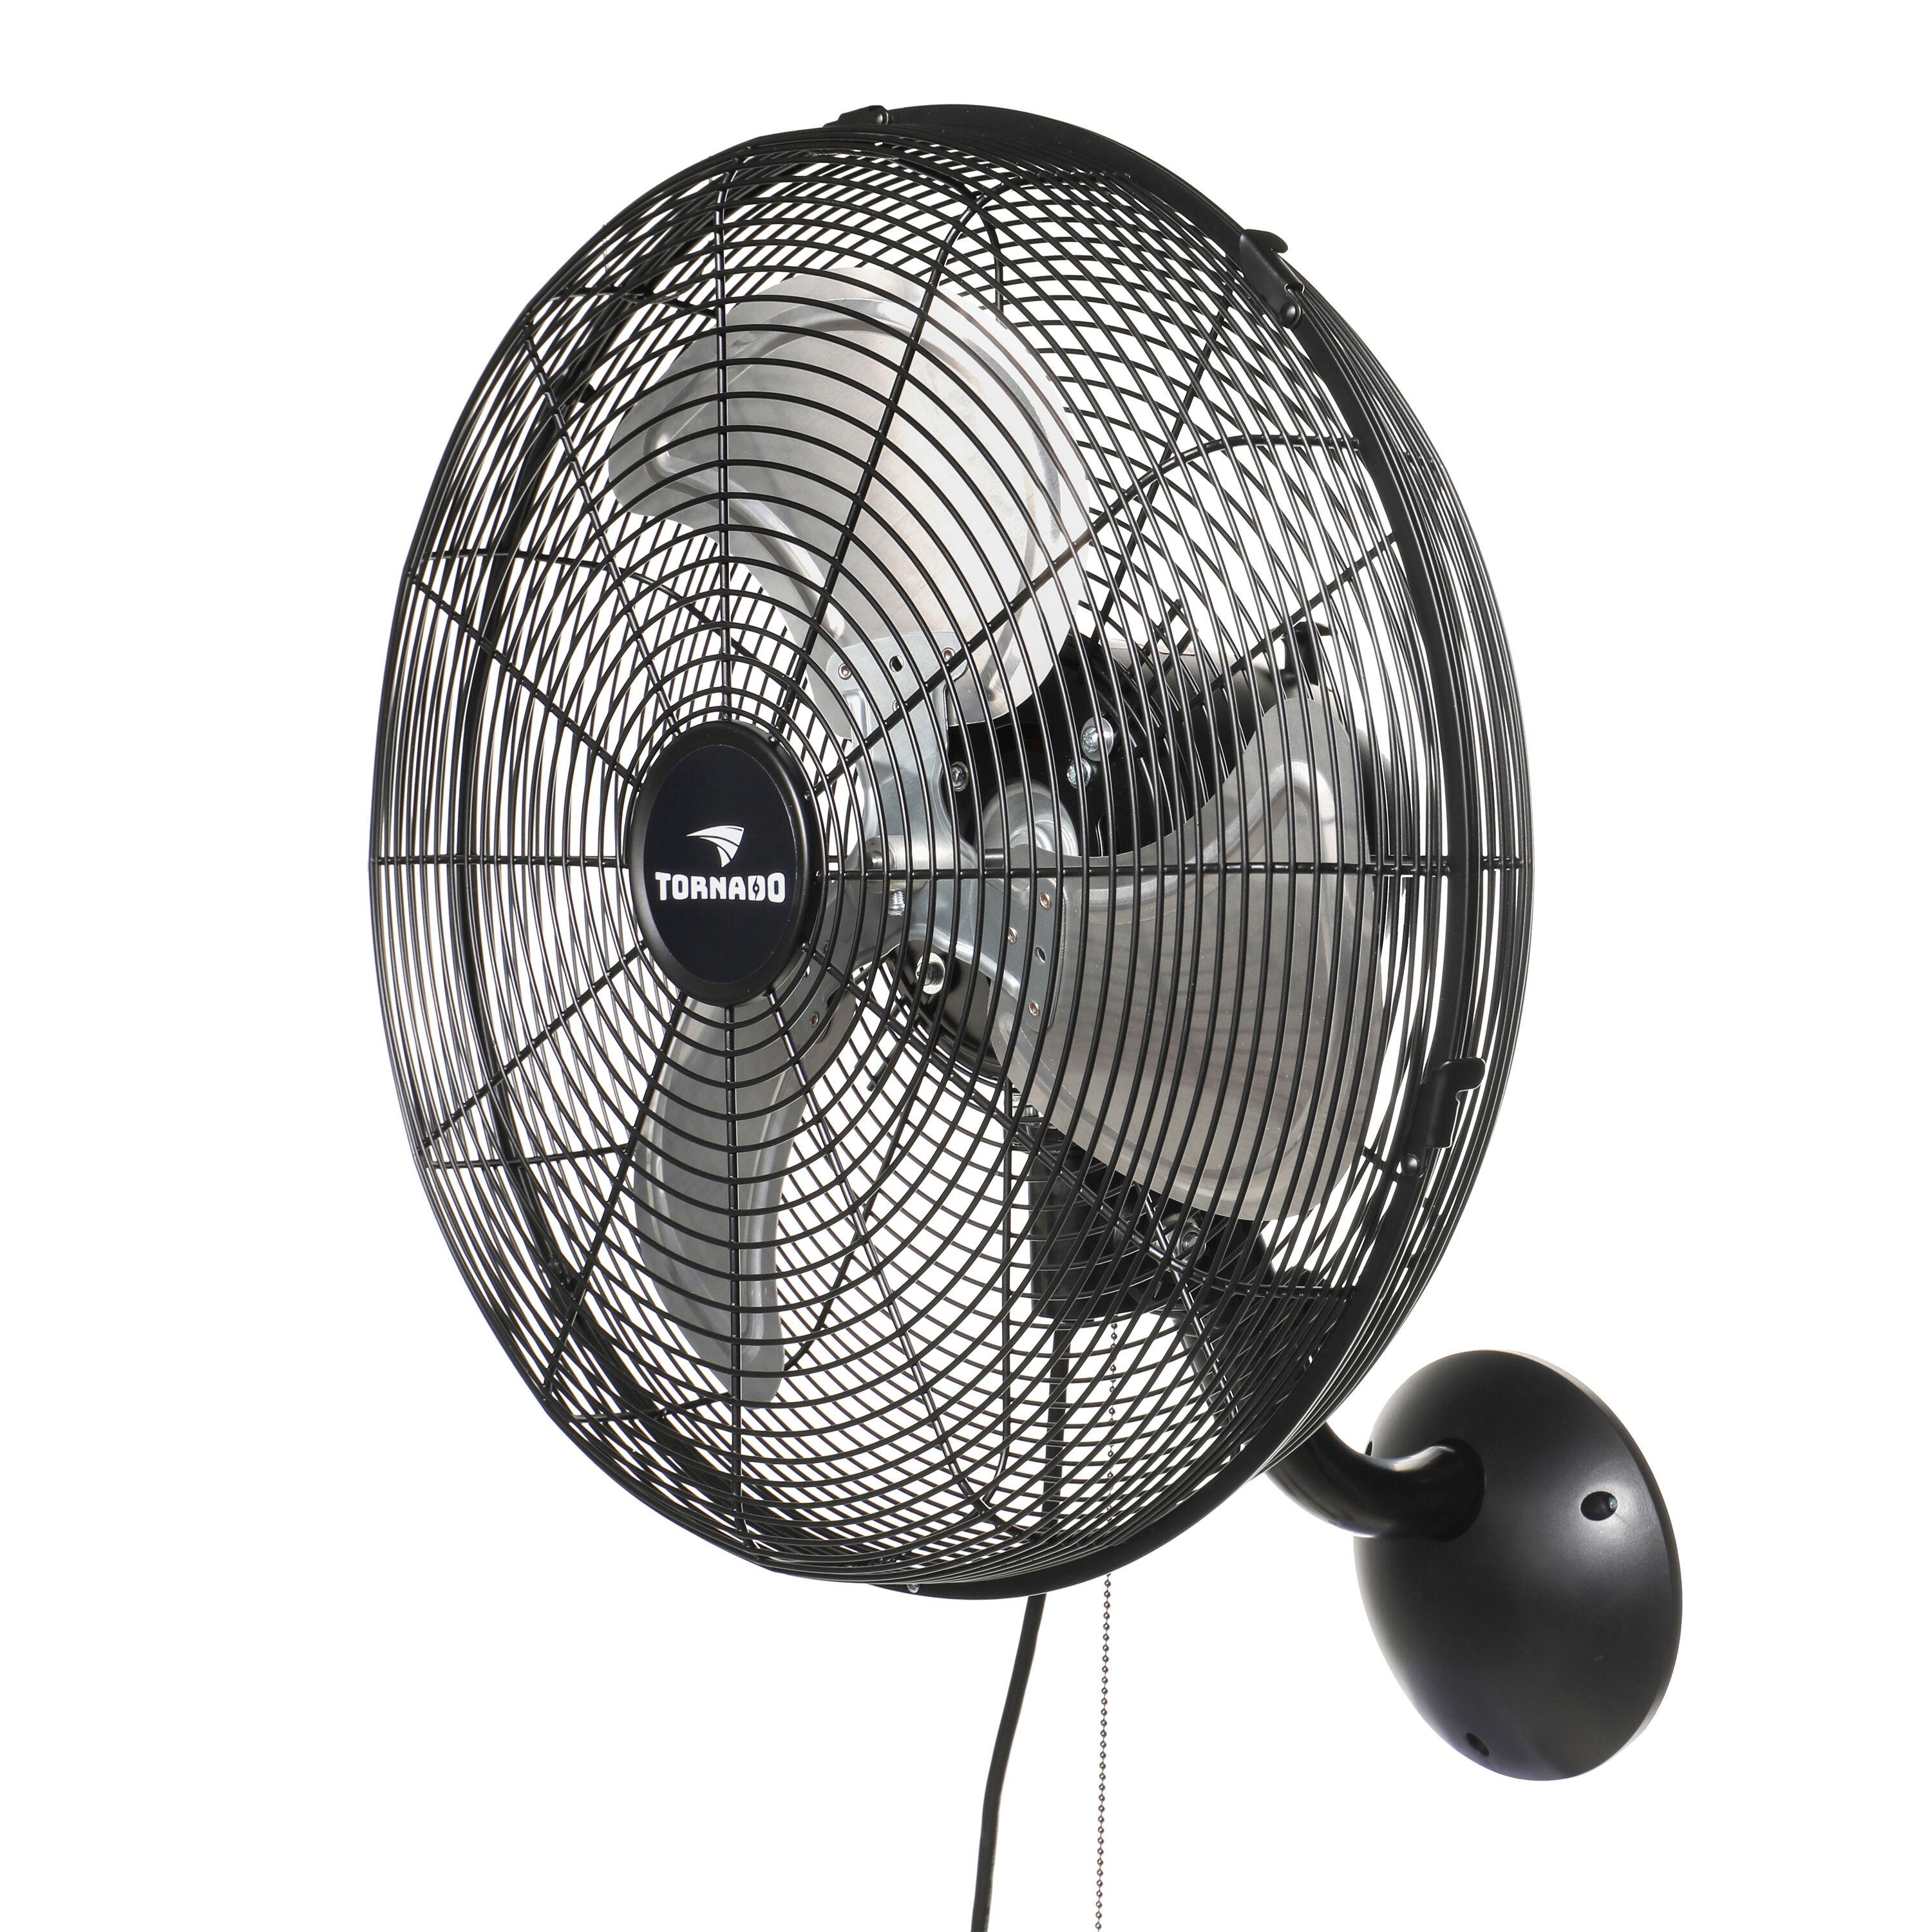 Black & Decker FW1610 16-inch Wall Fan, 220V (Non-USA Compliant)